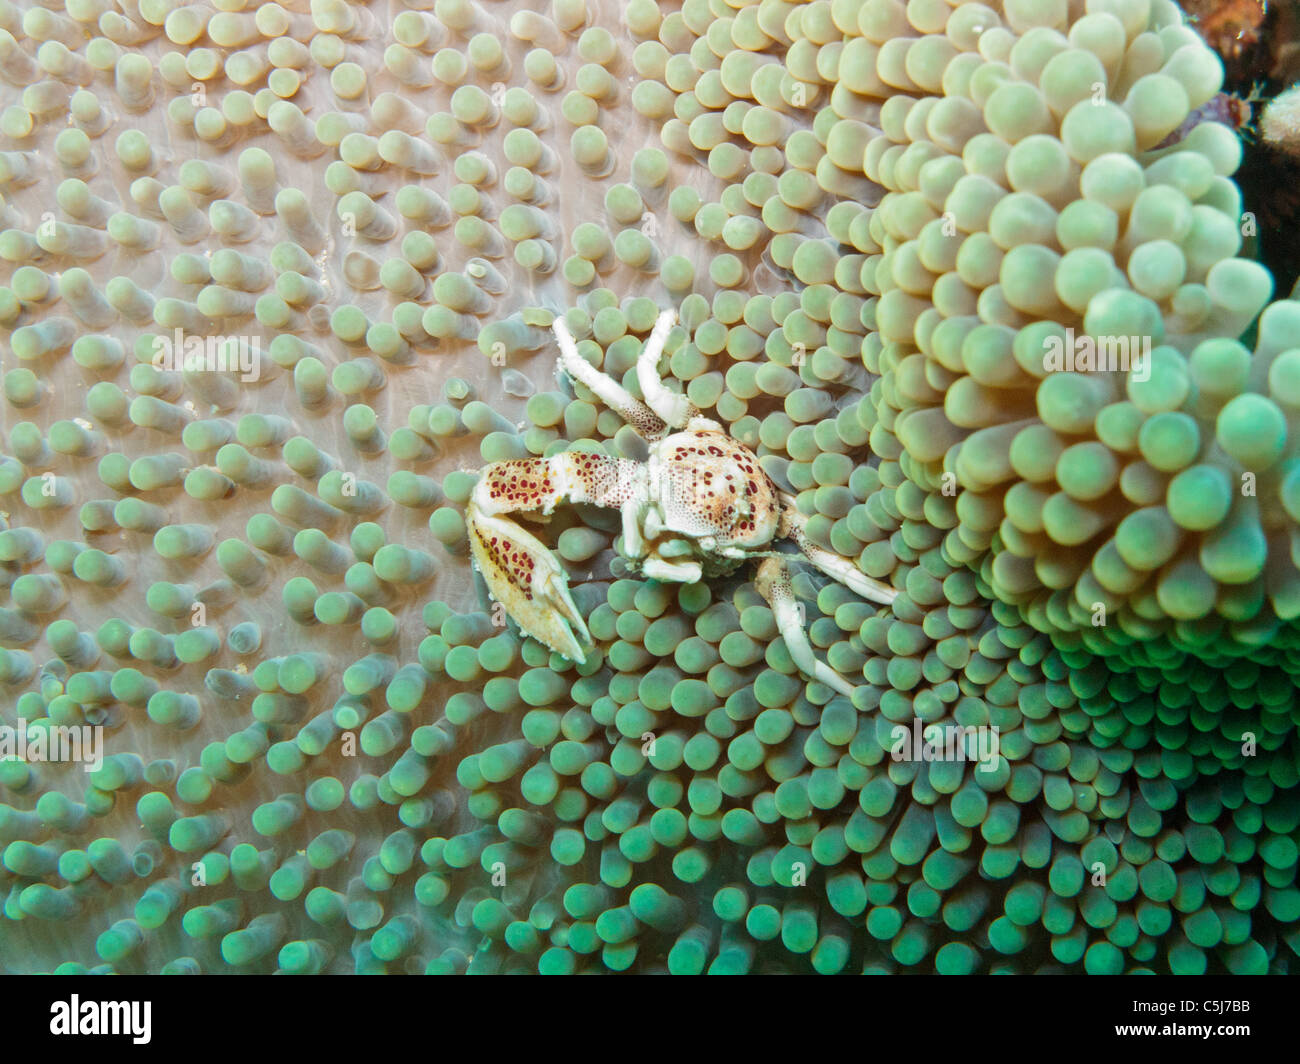 Anemone crab feeding on sea anemone Stock Photo